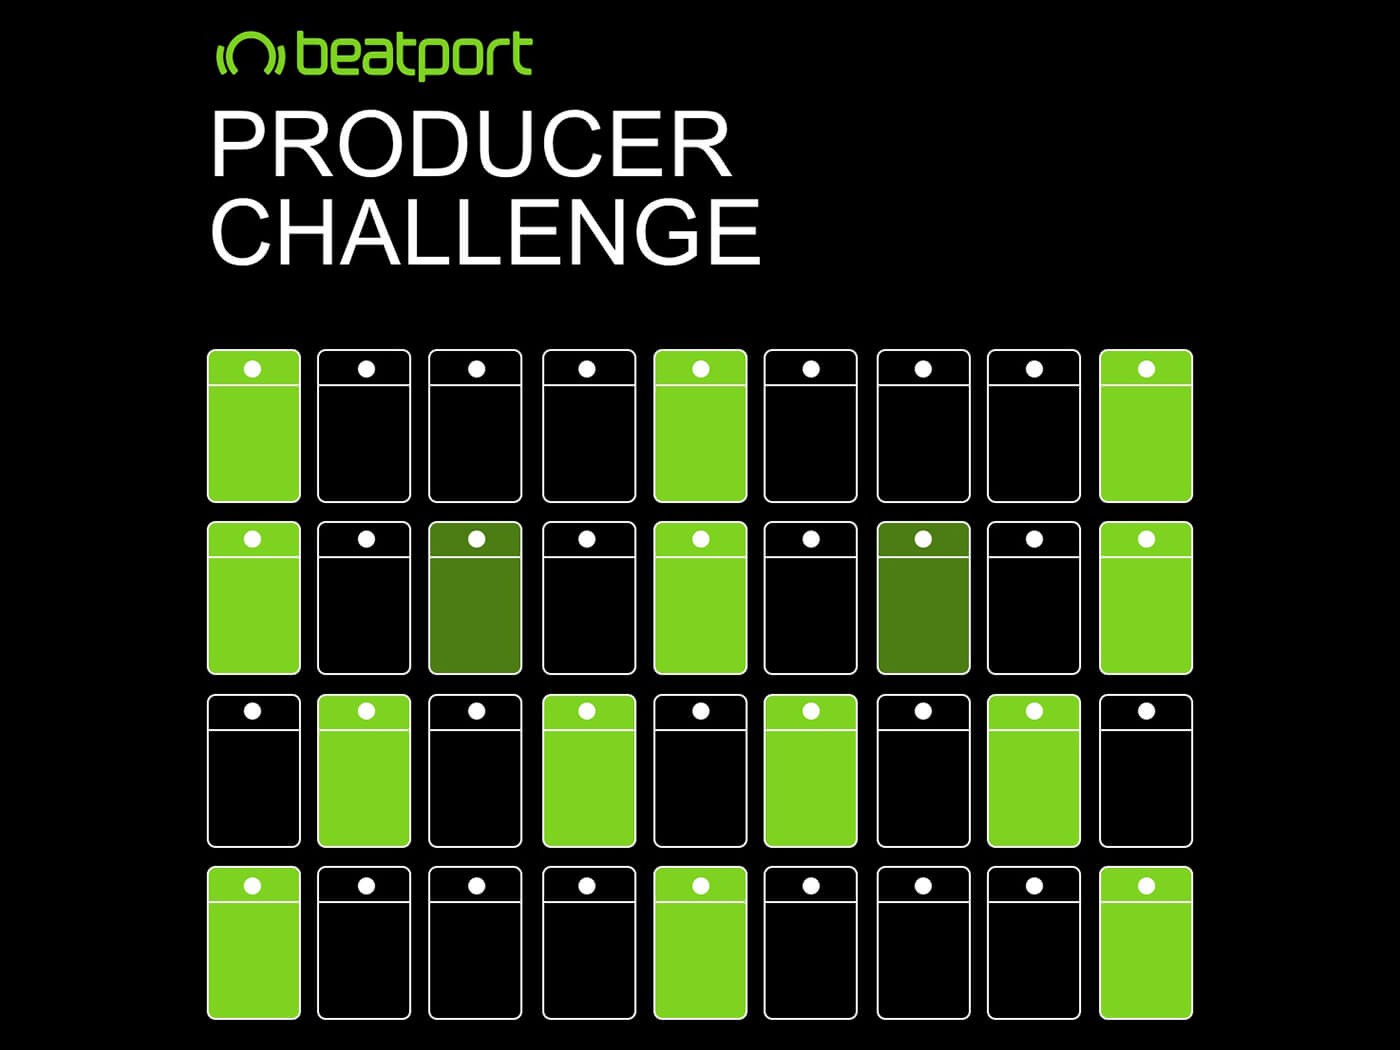 Beat Port Producer Challenge Promo Pic